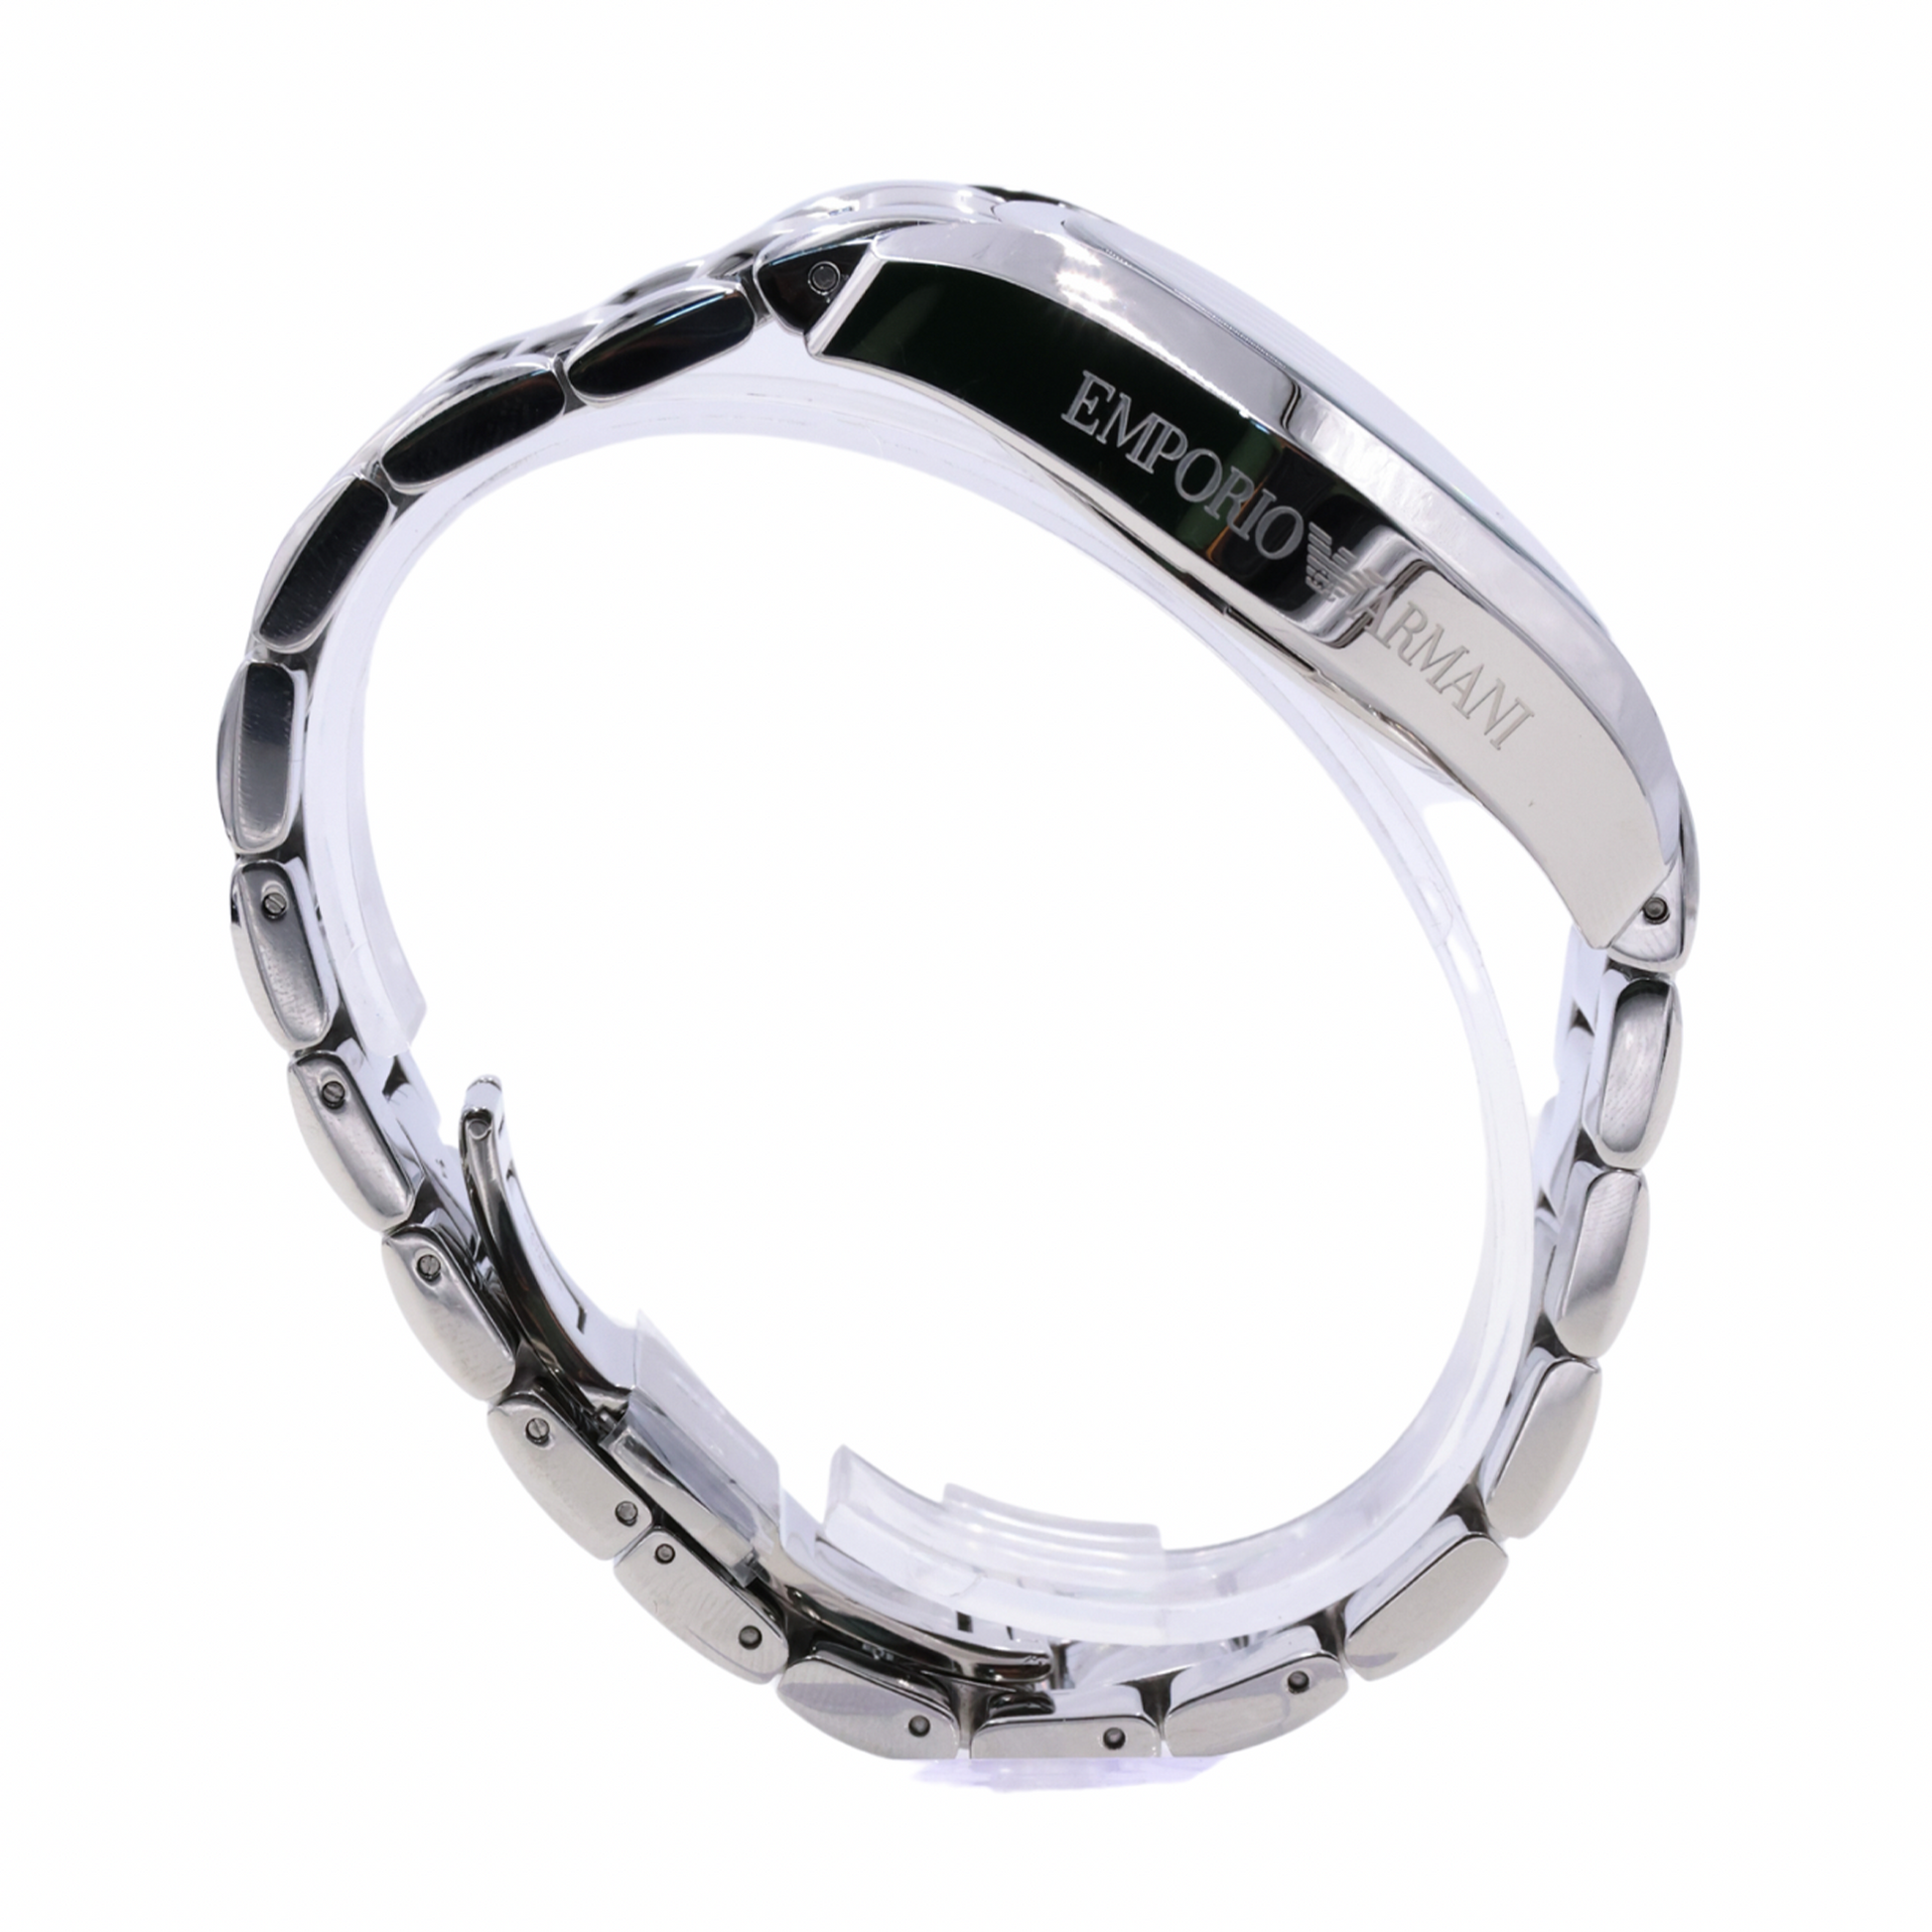 Emporio Armani Chronograph Black Dial Stainless Steel Men's Watch - AR067 - 723763129114 